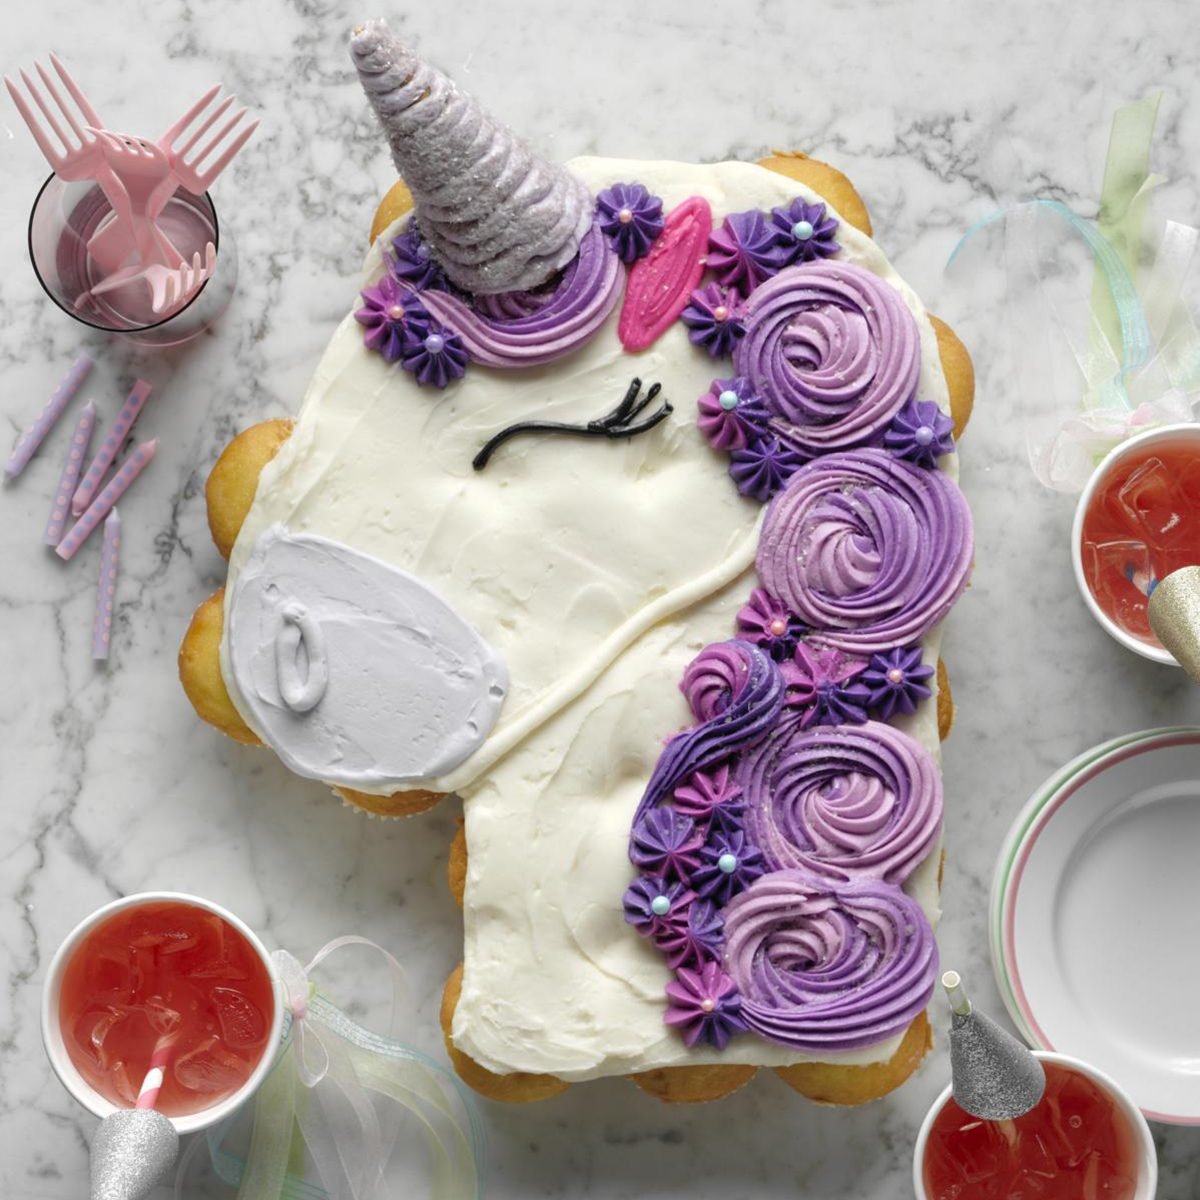 25 Easy Halloween Cupcakes Ideas - Halloween cupcake Recipes